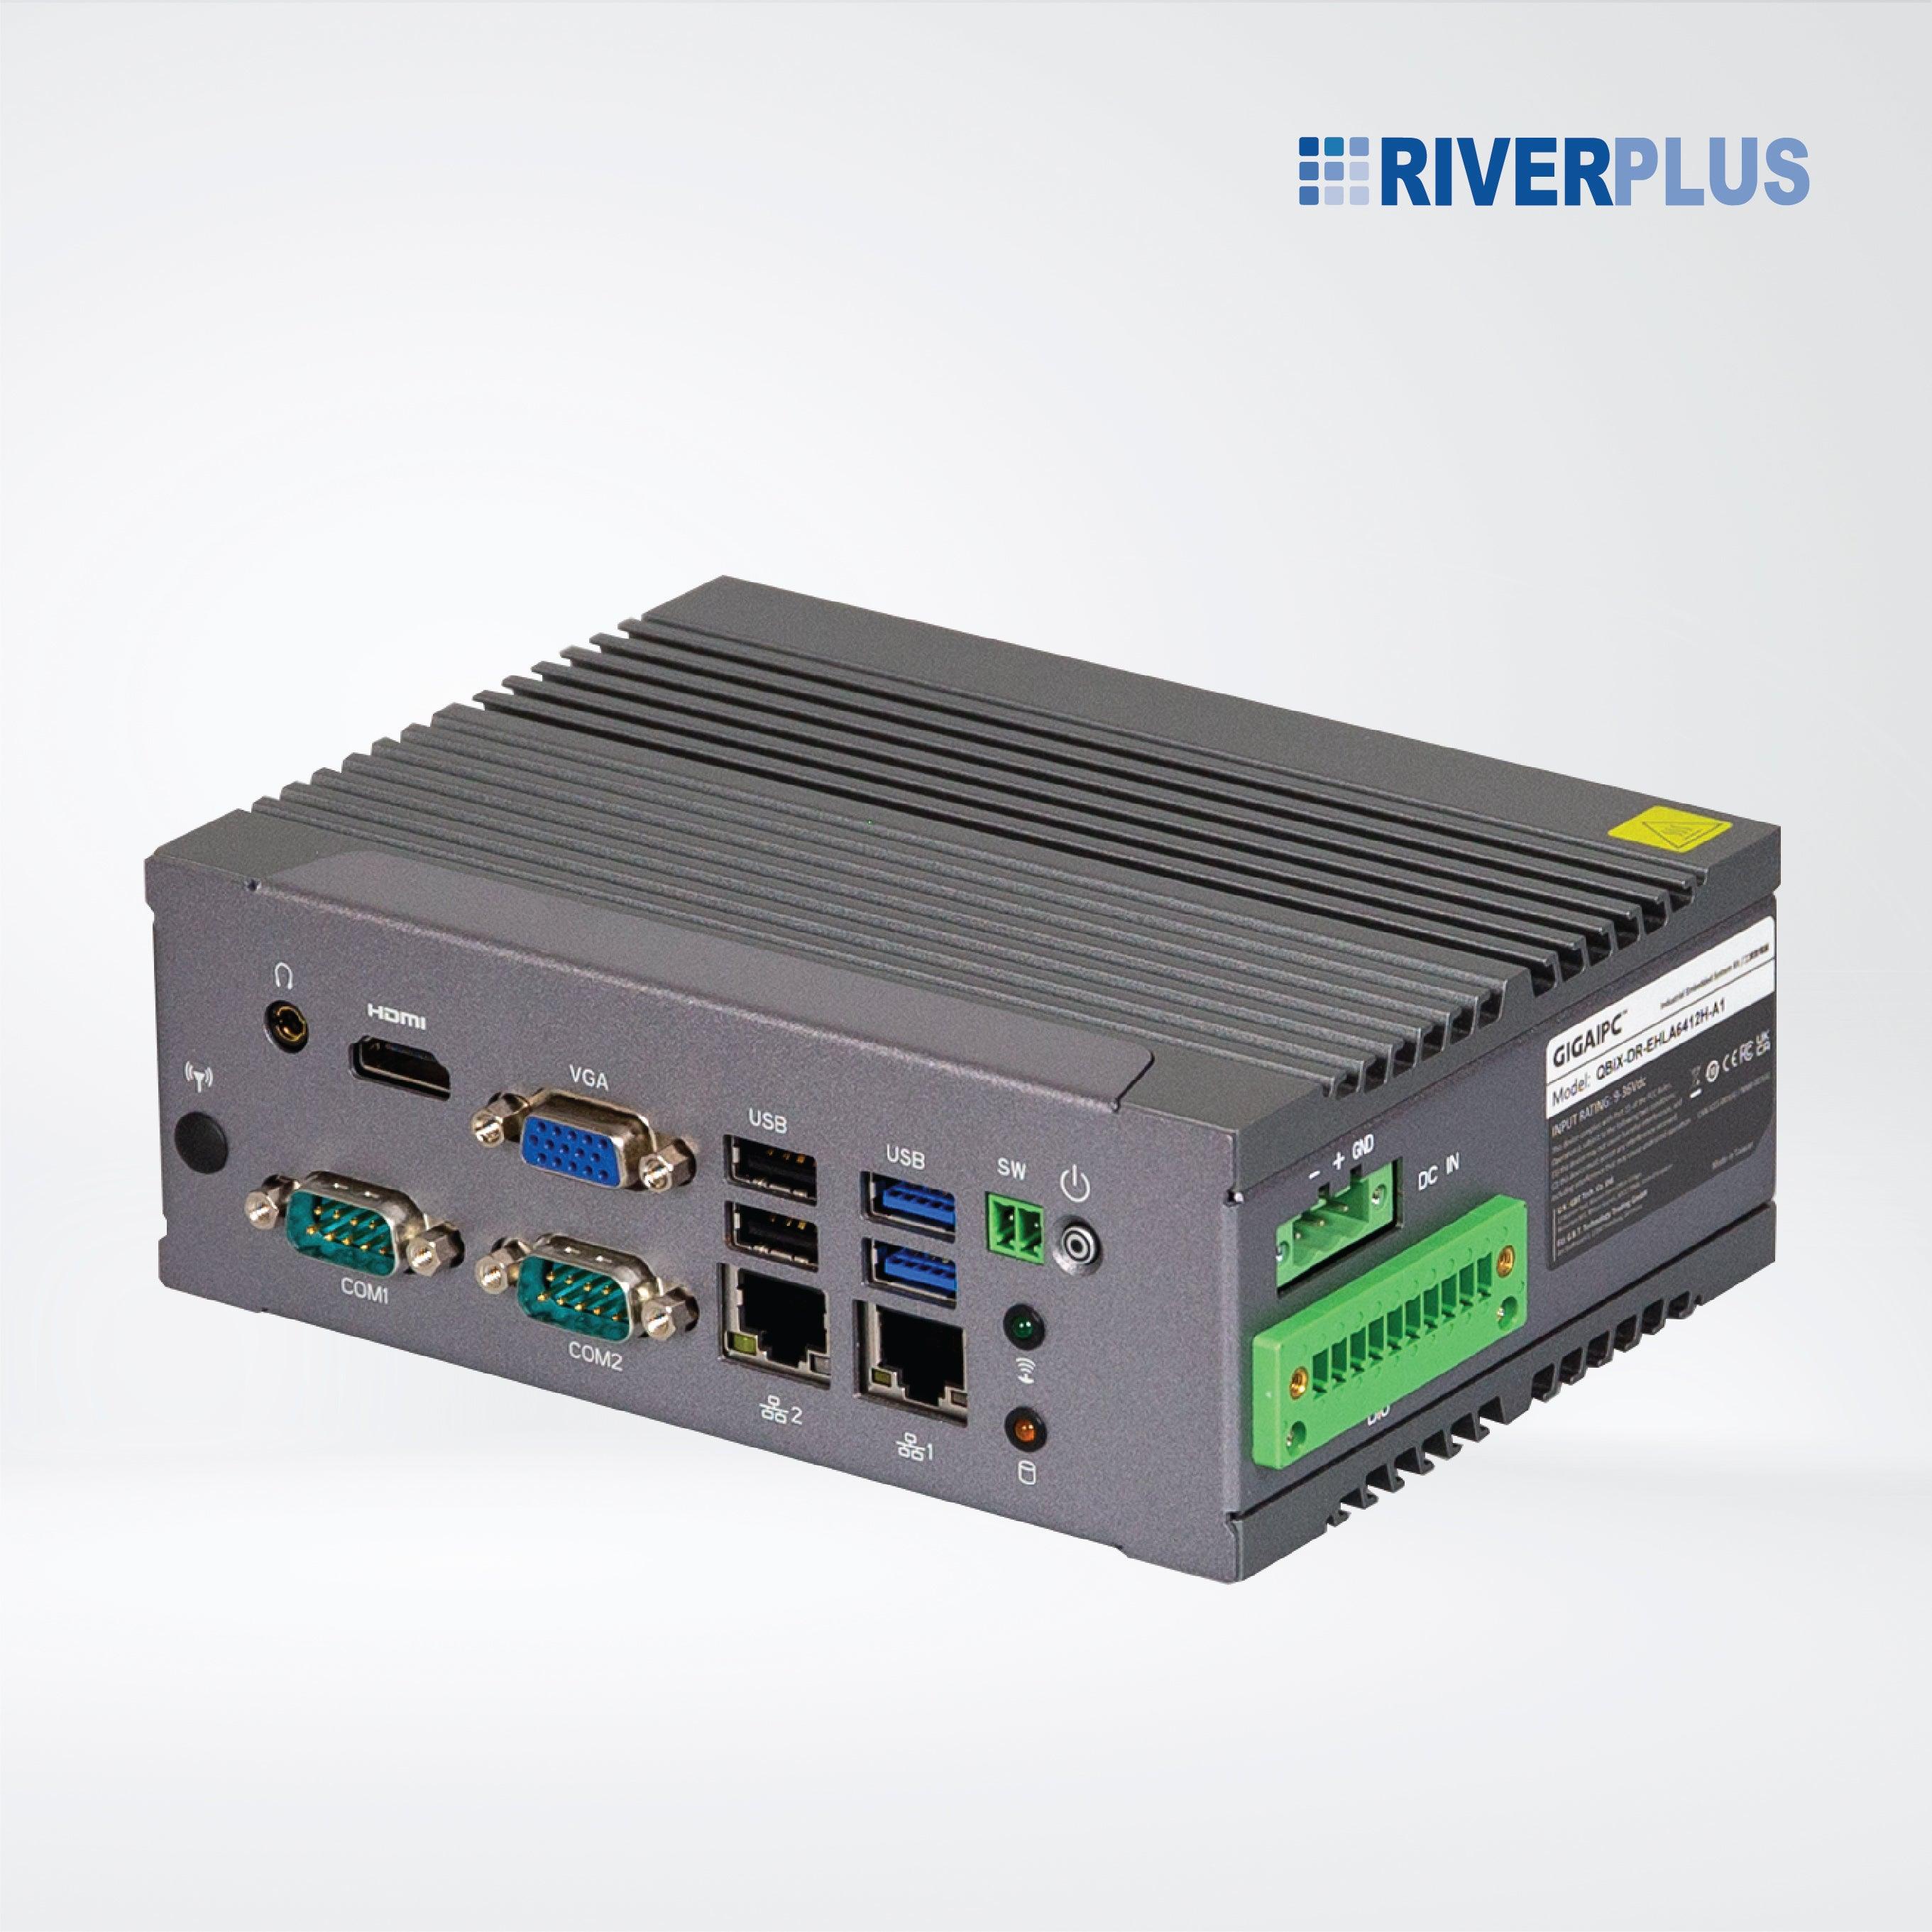 QBiX-DR-EHLA6412H-A1 DIN Rail industrial system with Intel® Celeron® J6412 Processor - Riverplus